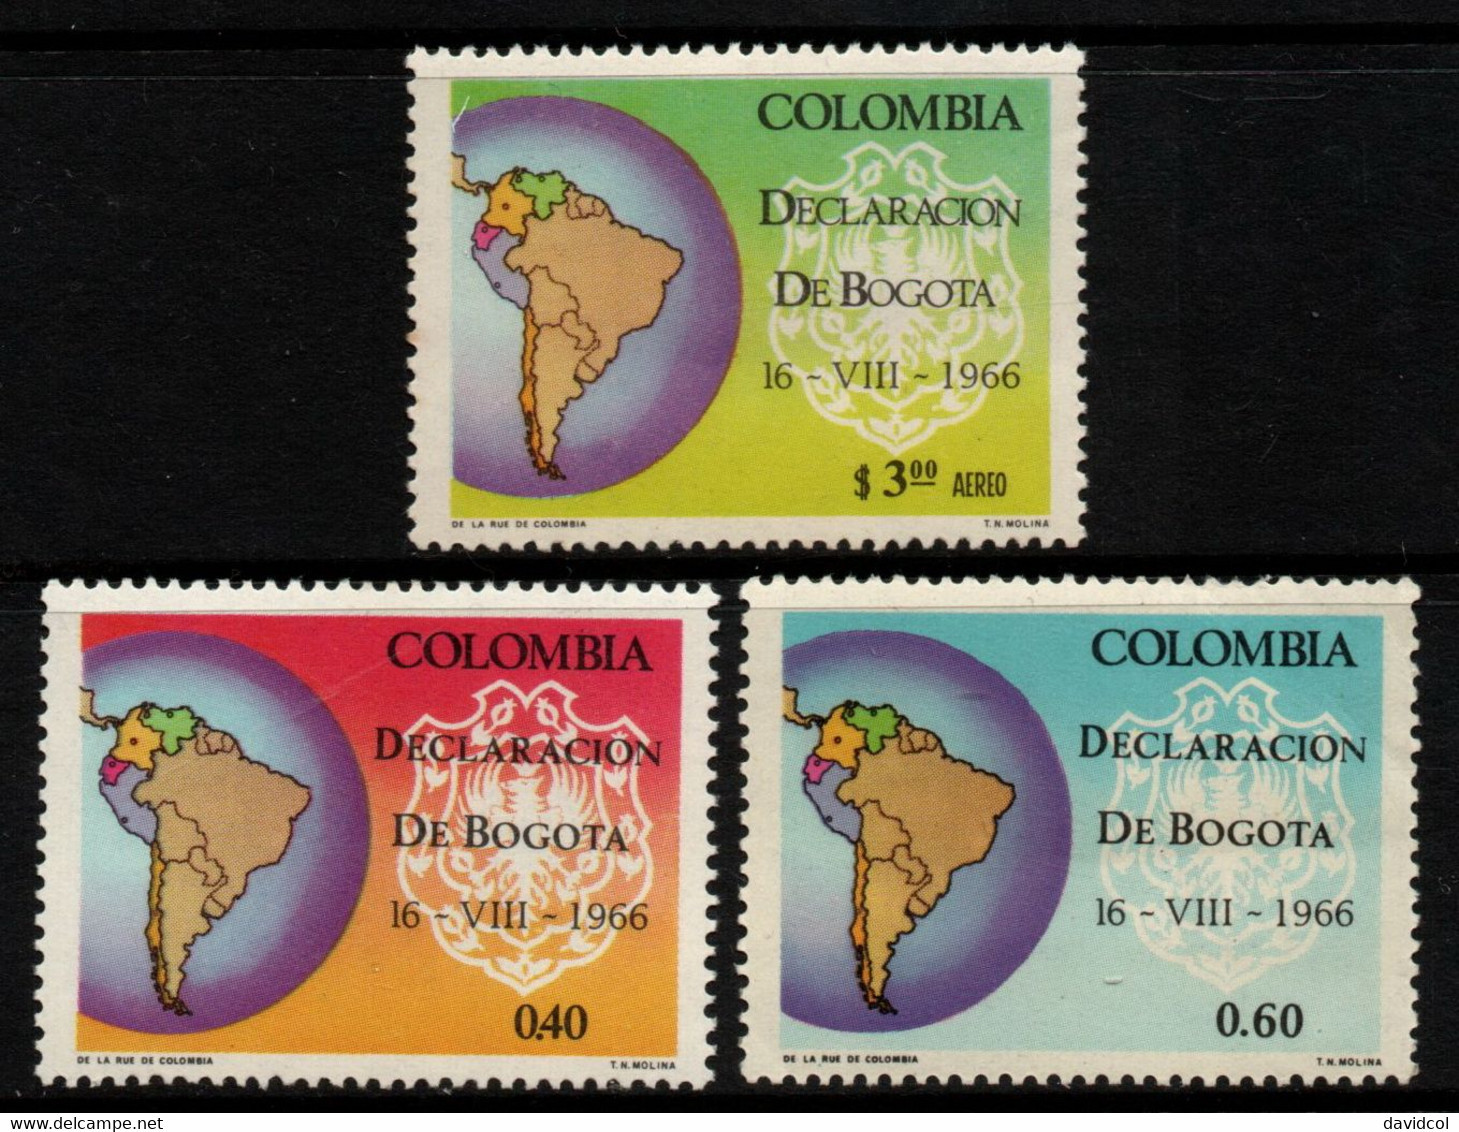 02- KOLUMBIEN – 1967- MI#:1095-1097 - MNH- BOGOTA DECLARATION – MAPS/ COAT - Colombia